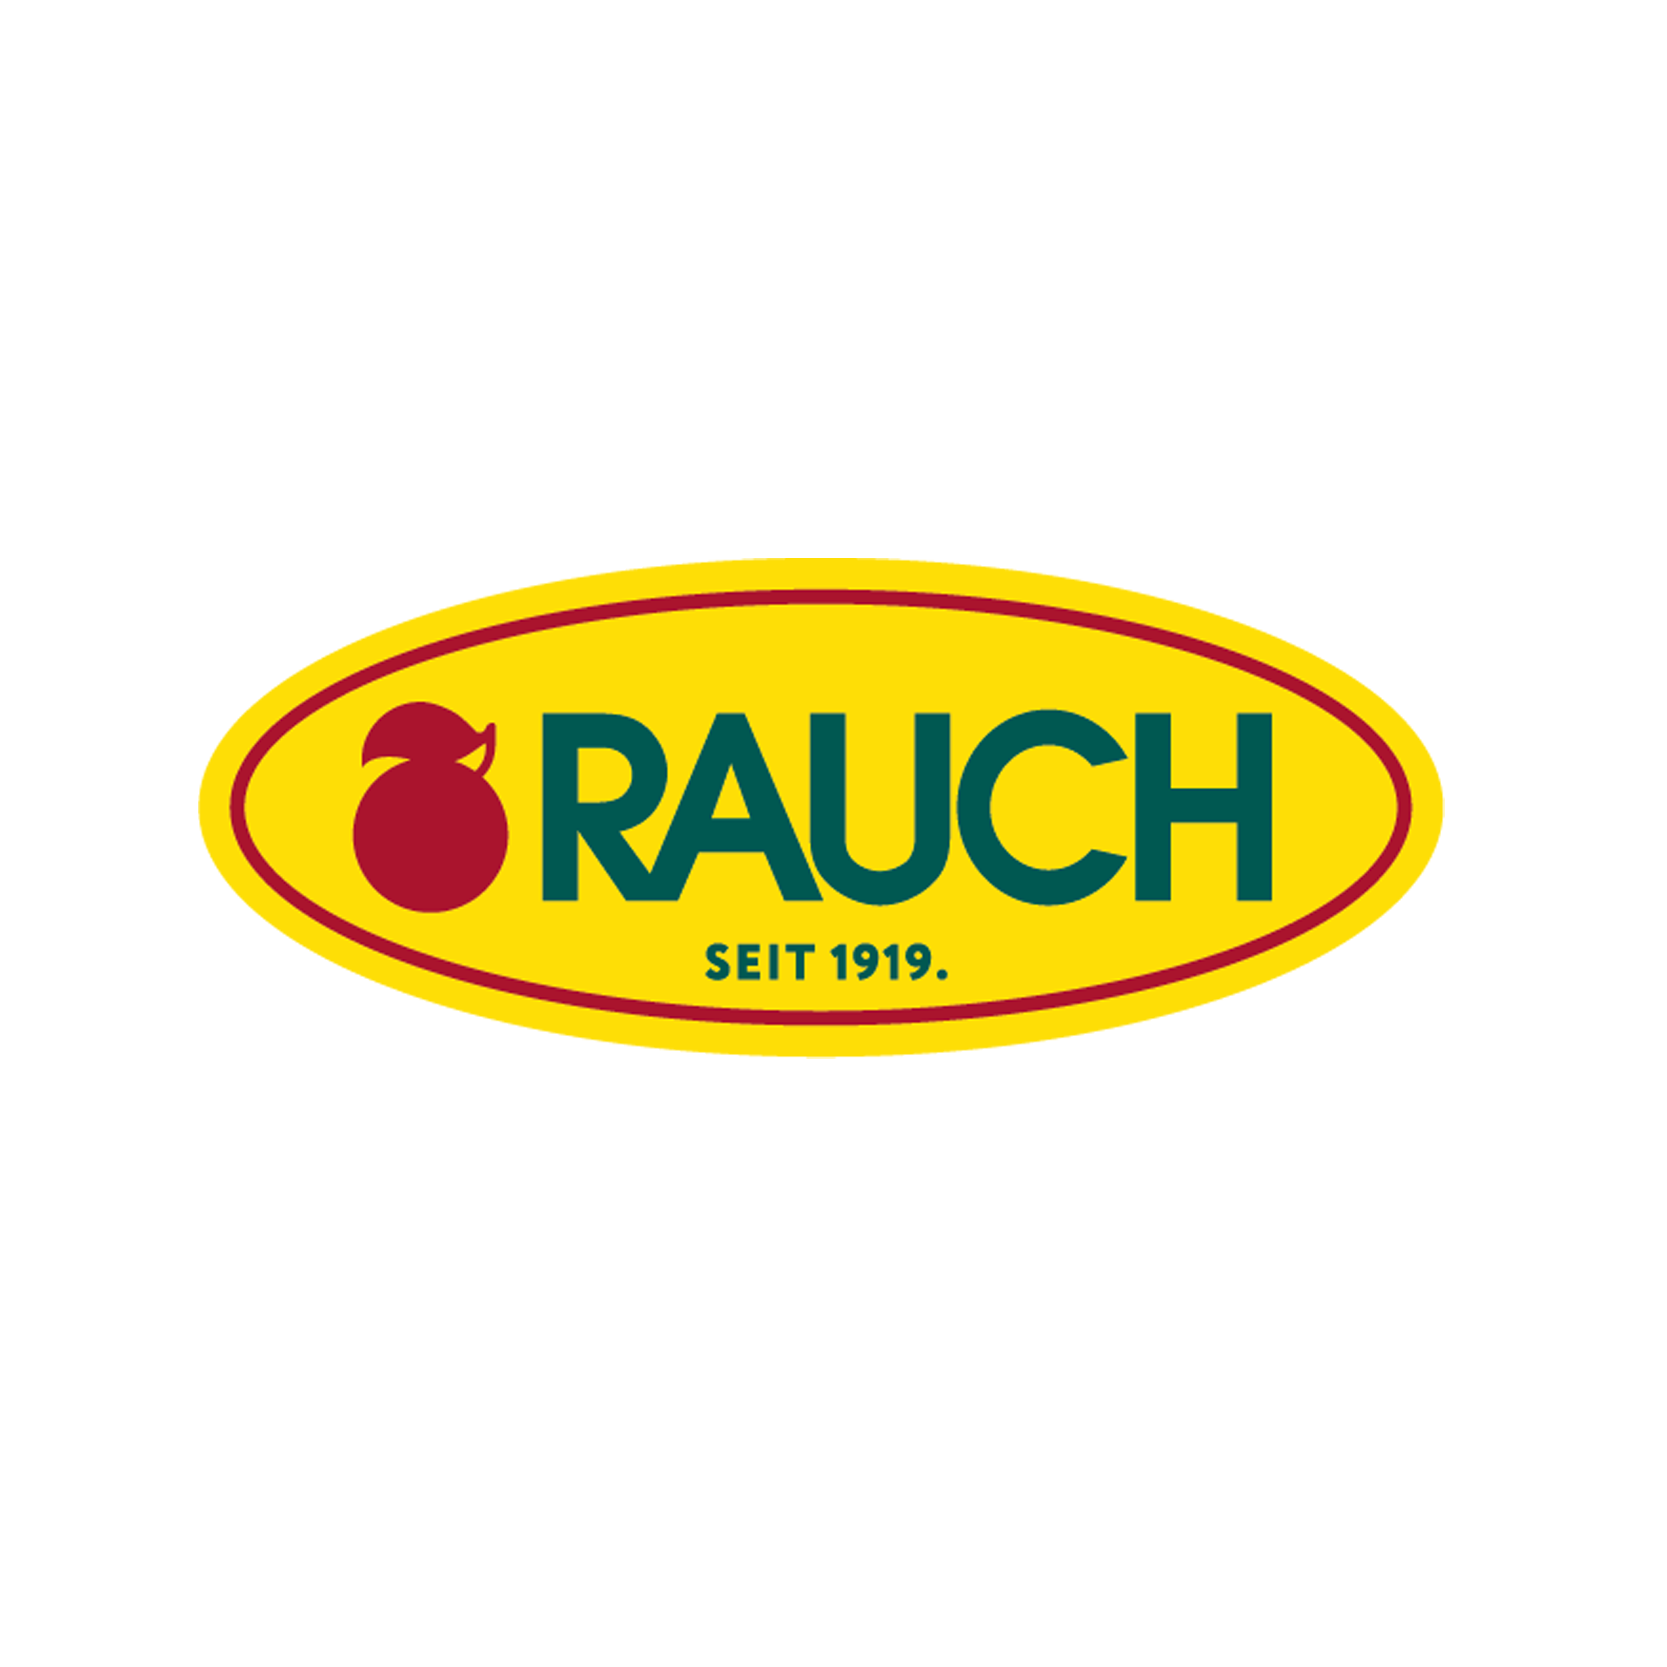 Rauch Fruchtsaf Logo Website